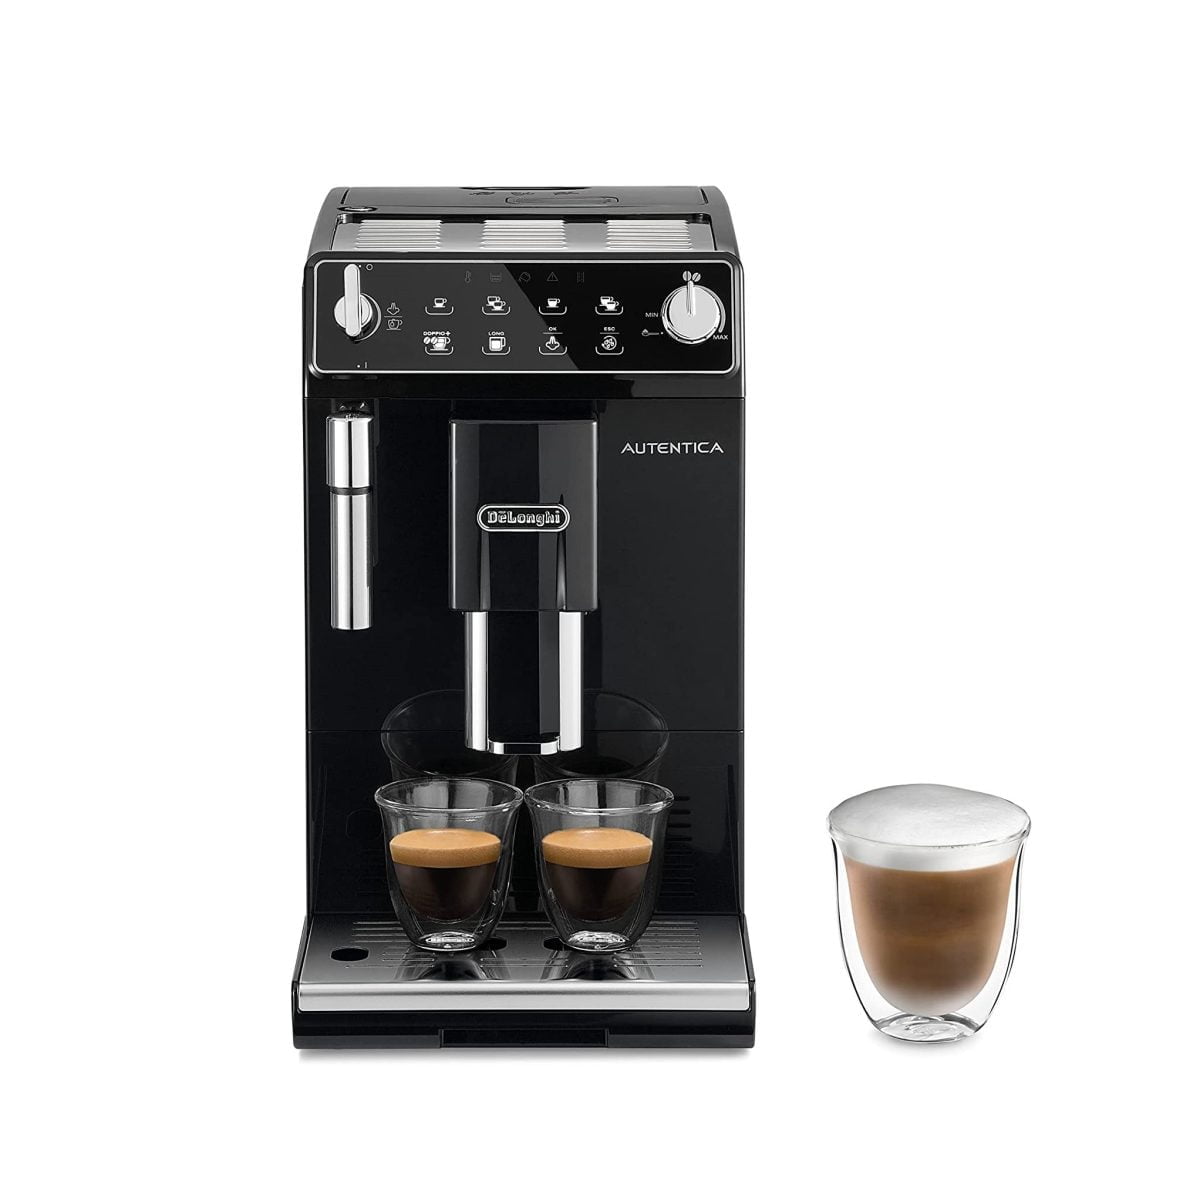 Delonghi Etam 29.510.Sb Autentica Coffee Machine, 1450 W, 1.3 Liters - Black